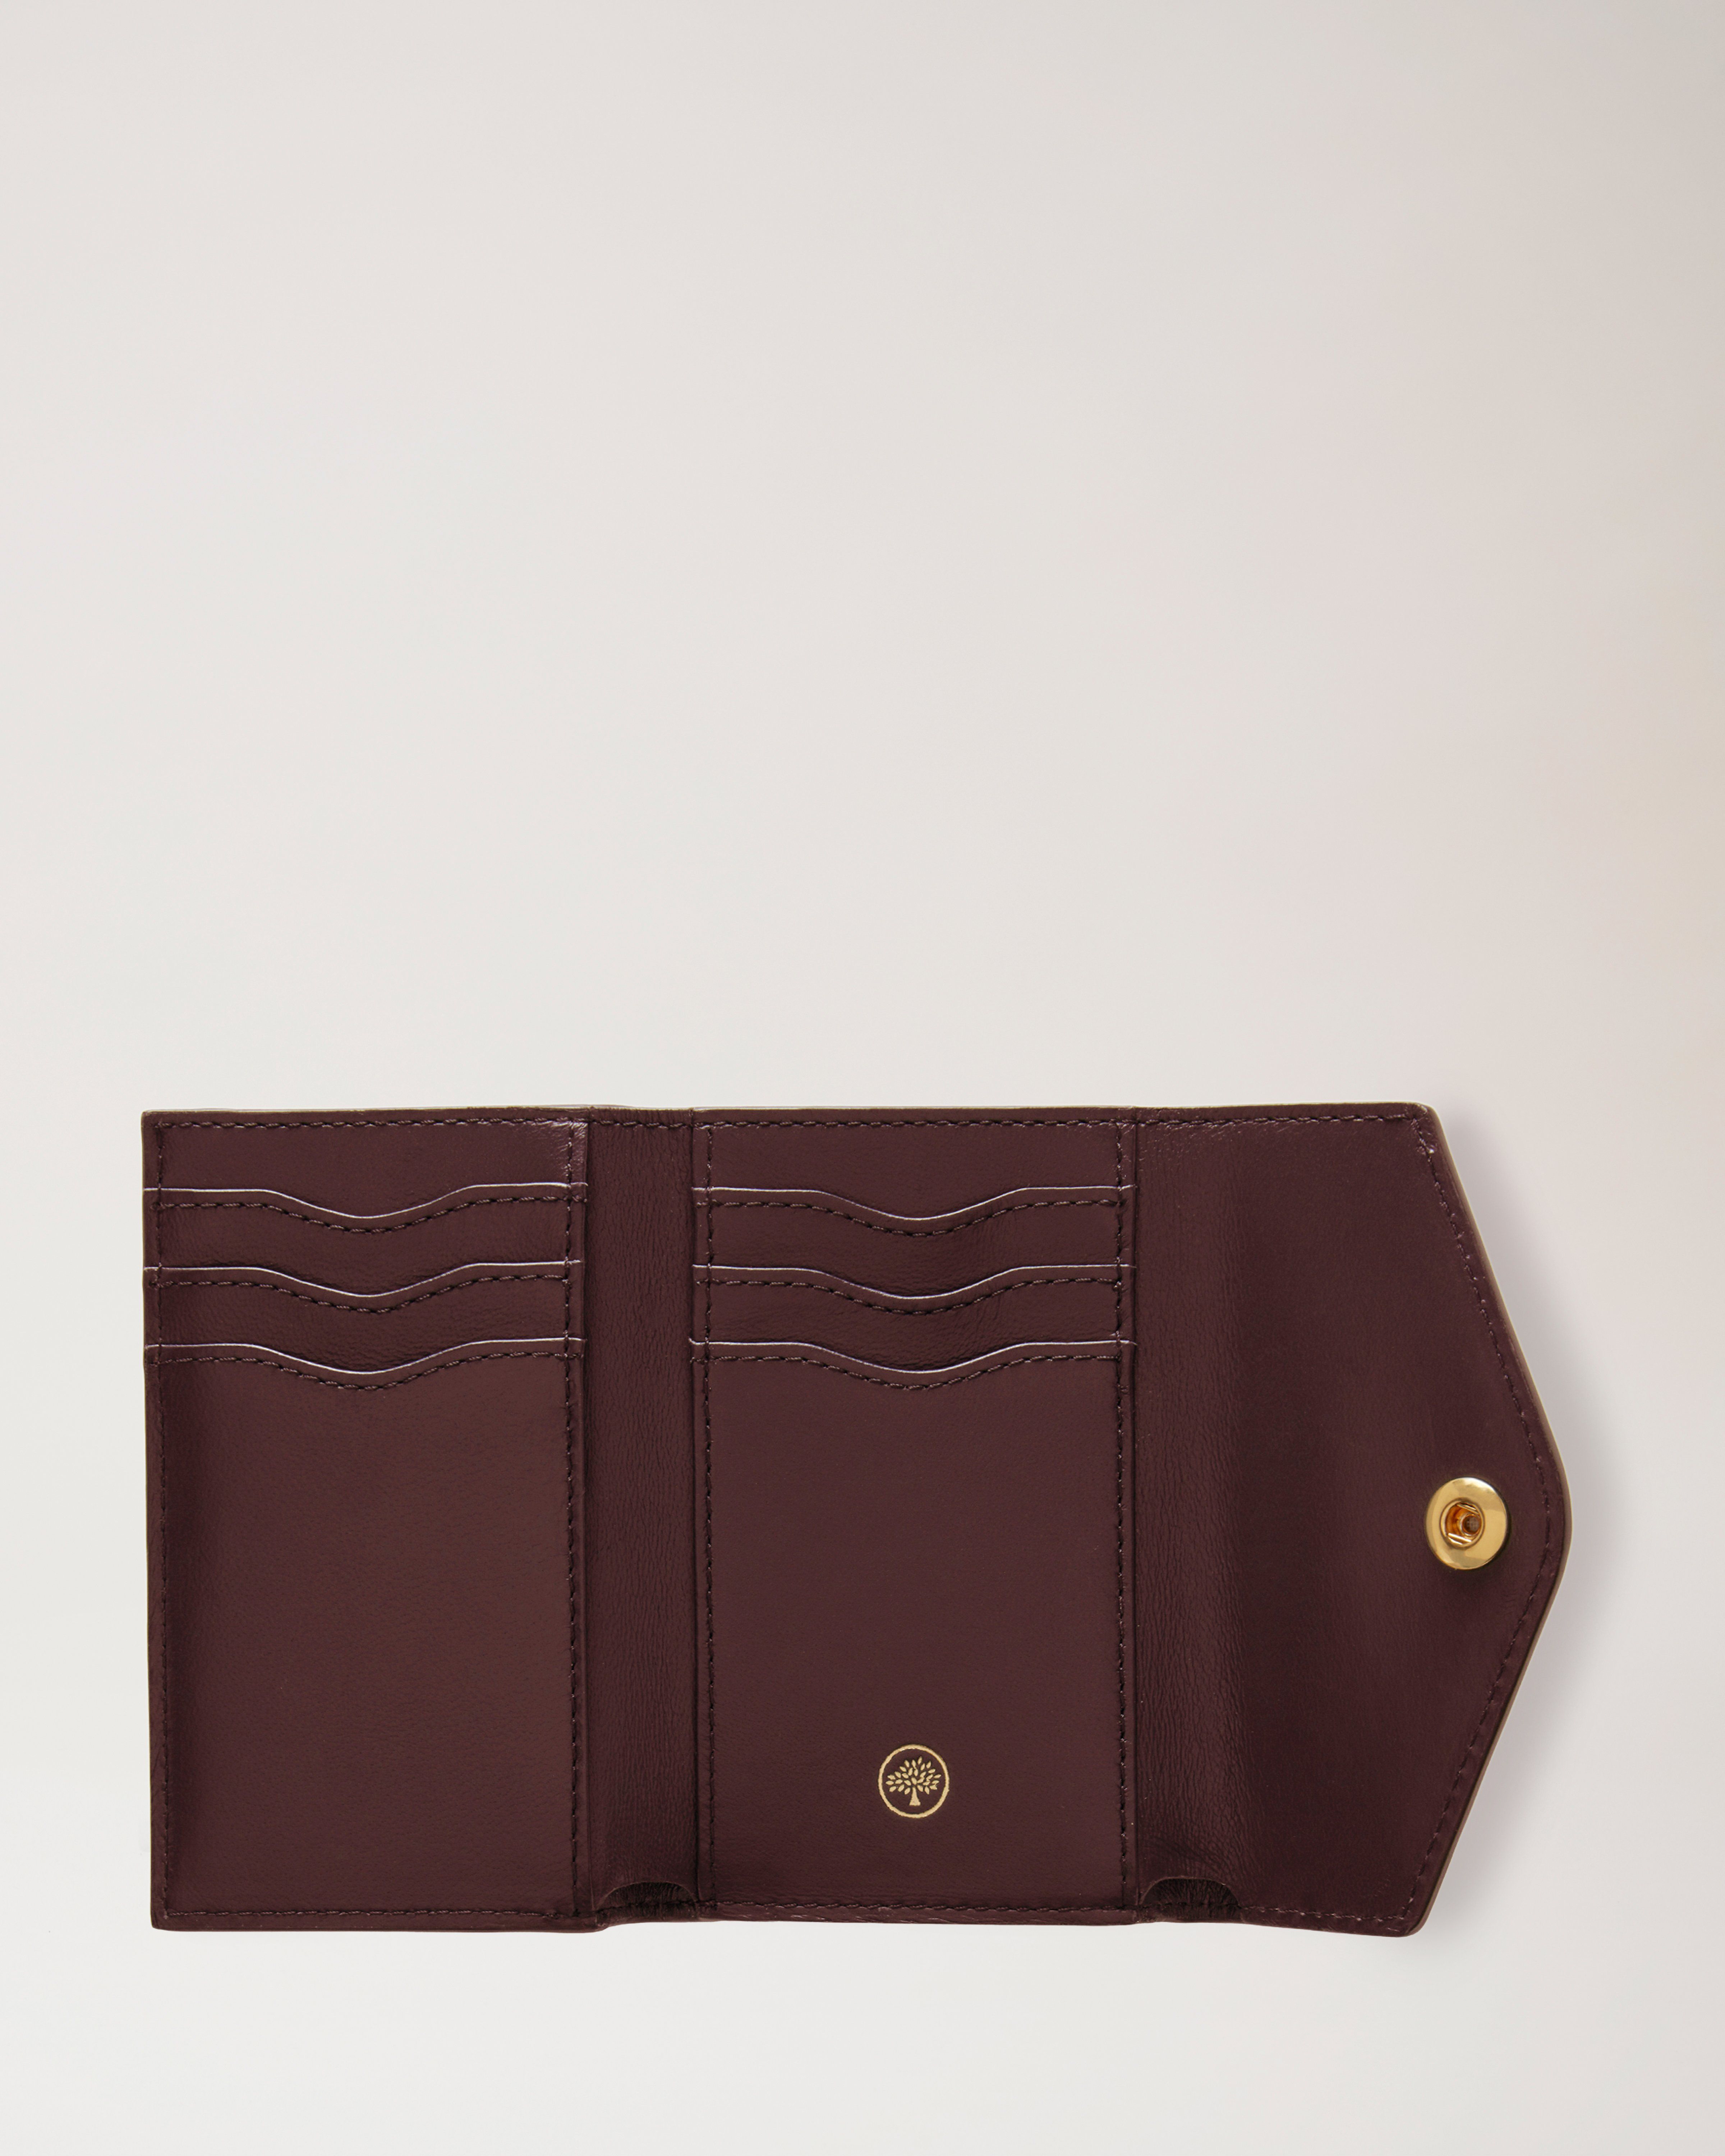 Fendi Pre-owned Women's Leather Wallet - Black - One Size